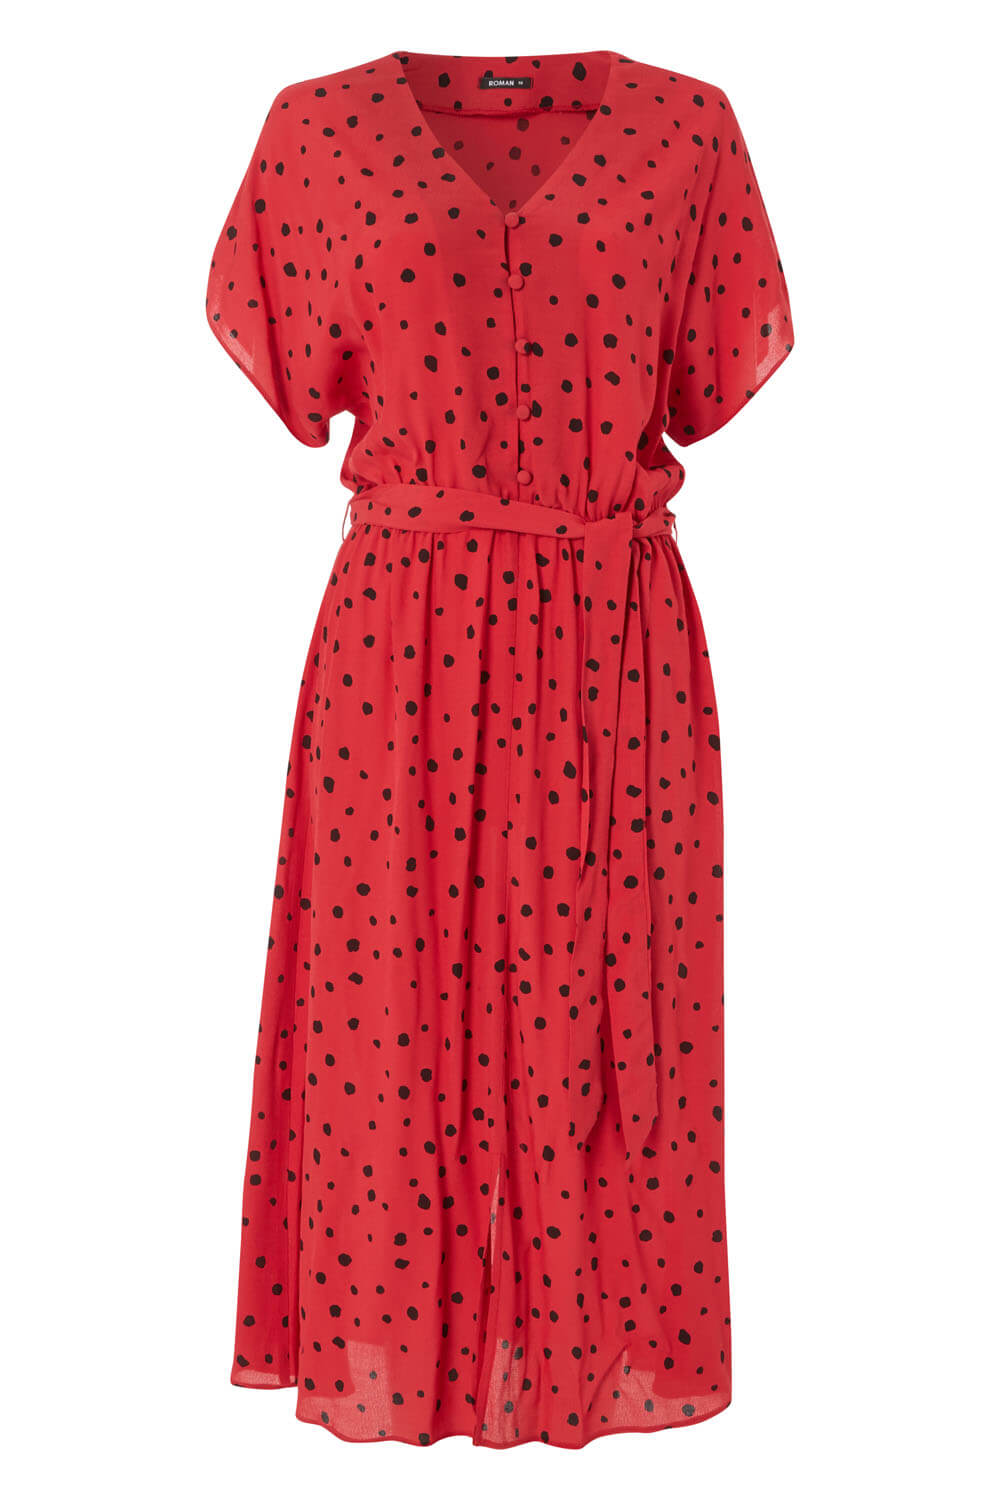 Red Polka Dot Midi Tea Dress, Image 4 of 4